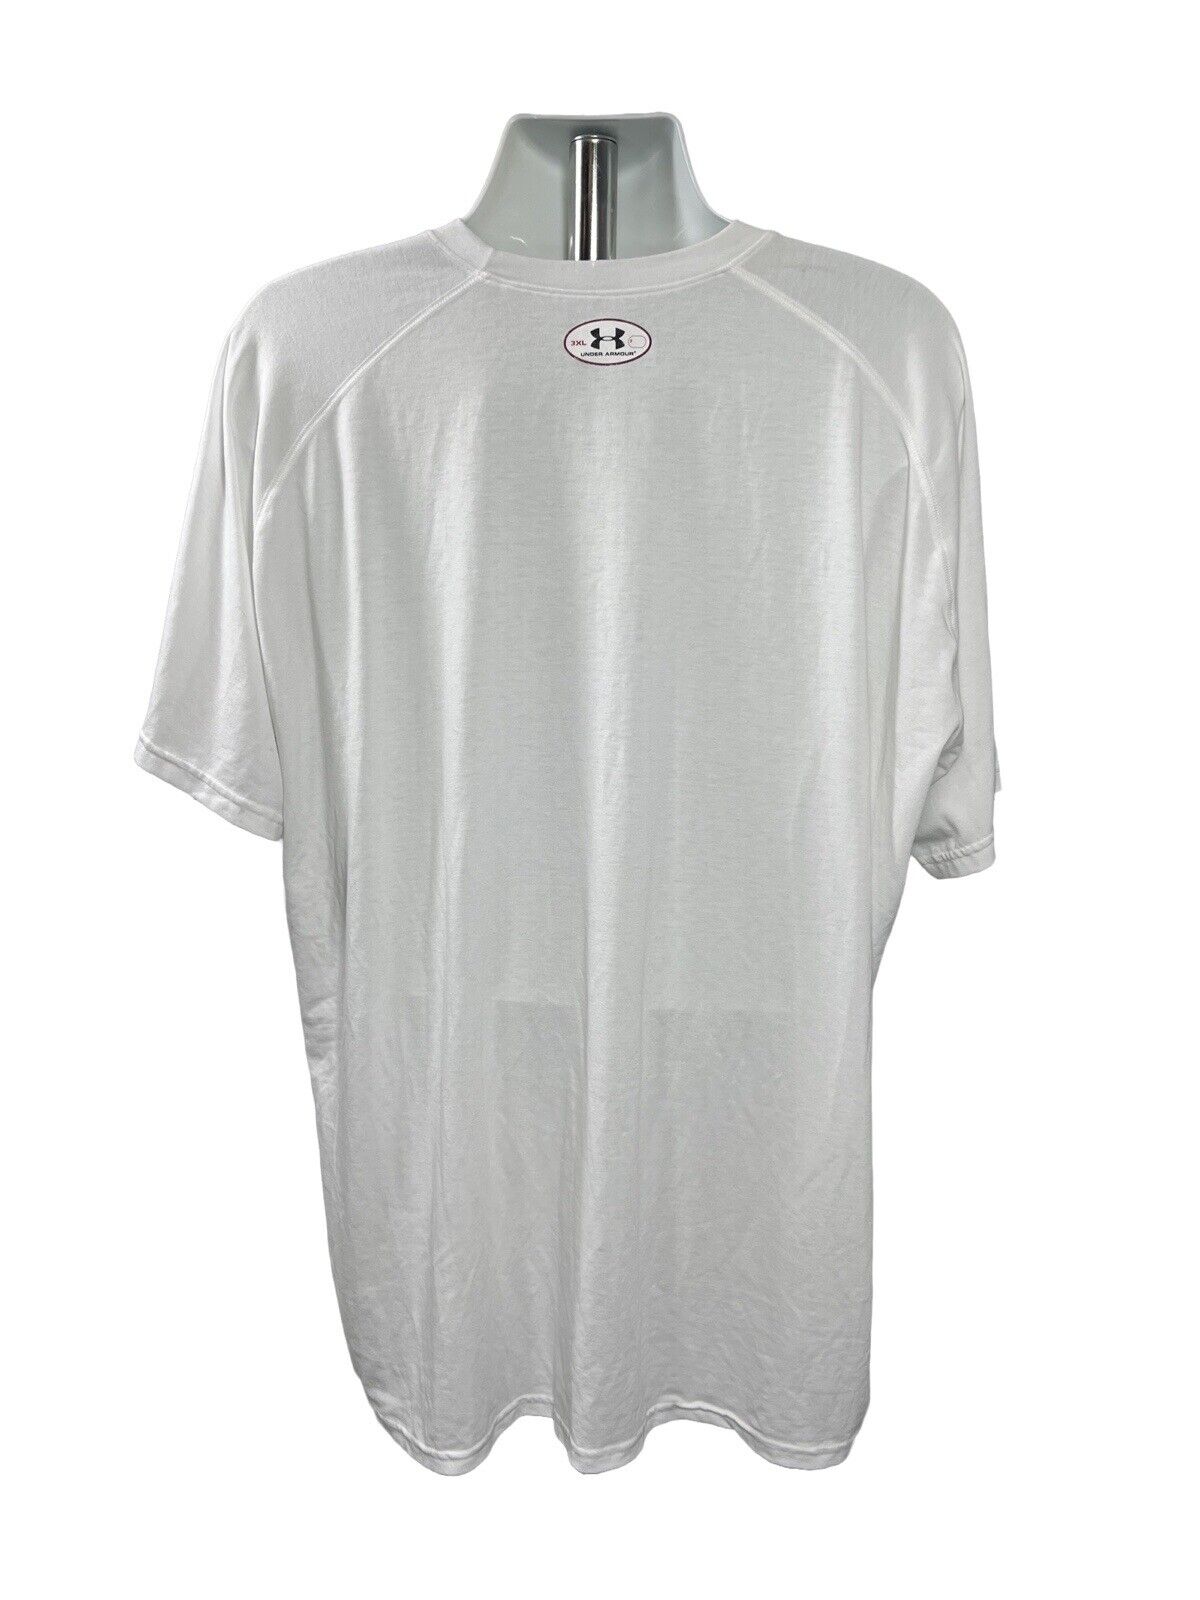 Under Armour Men's White Short Sleeve T-Shirt - 3XL